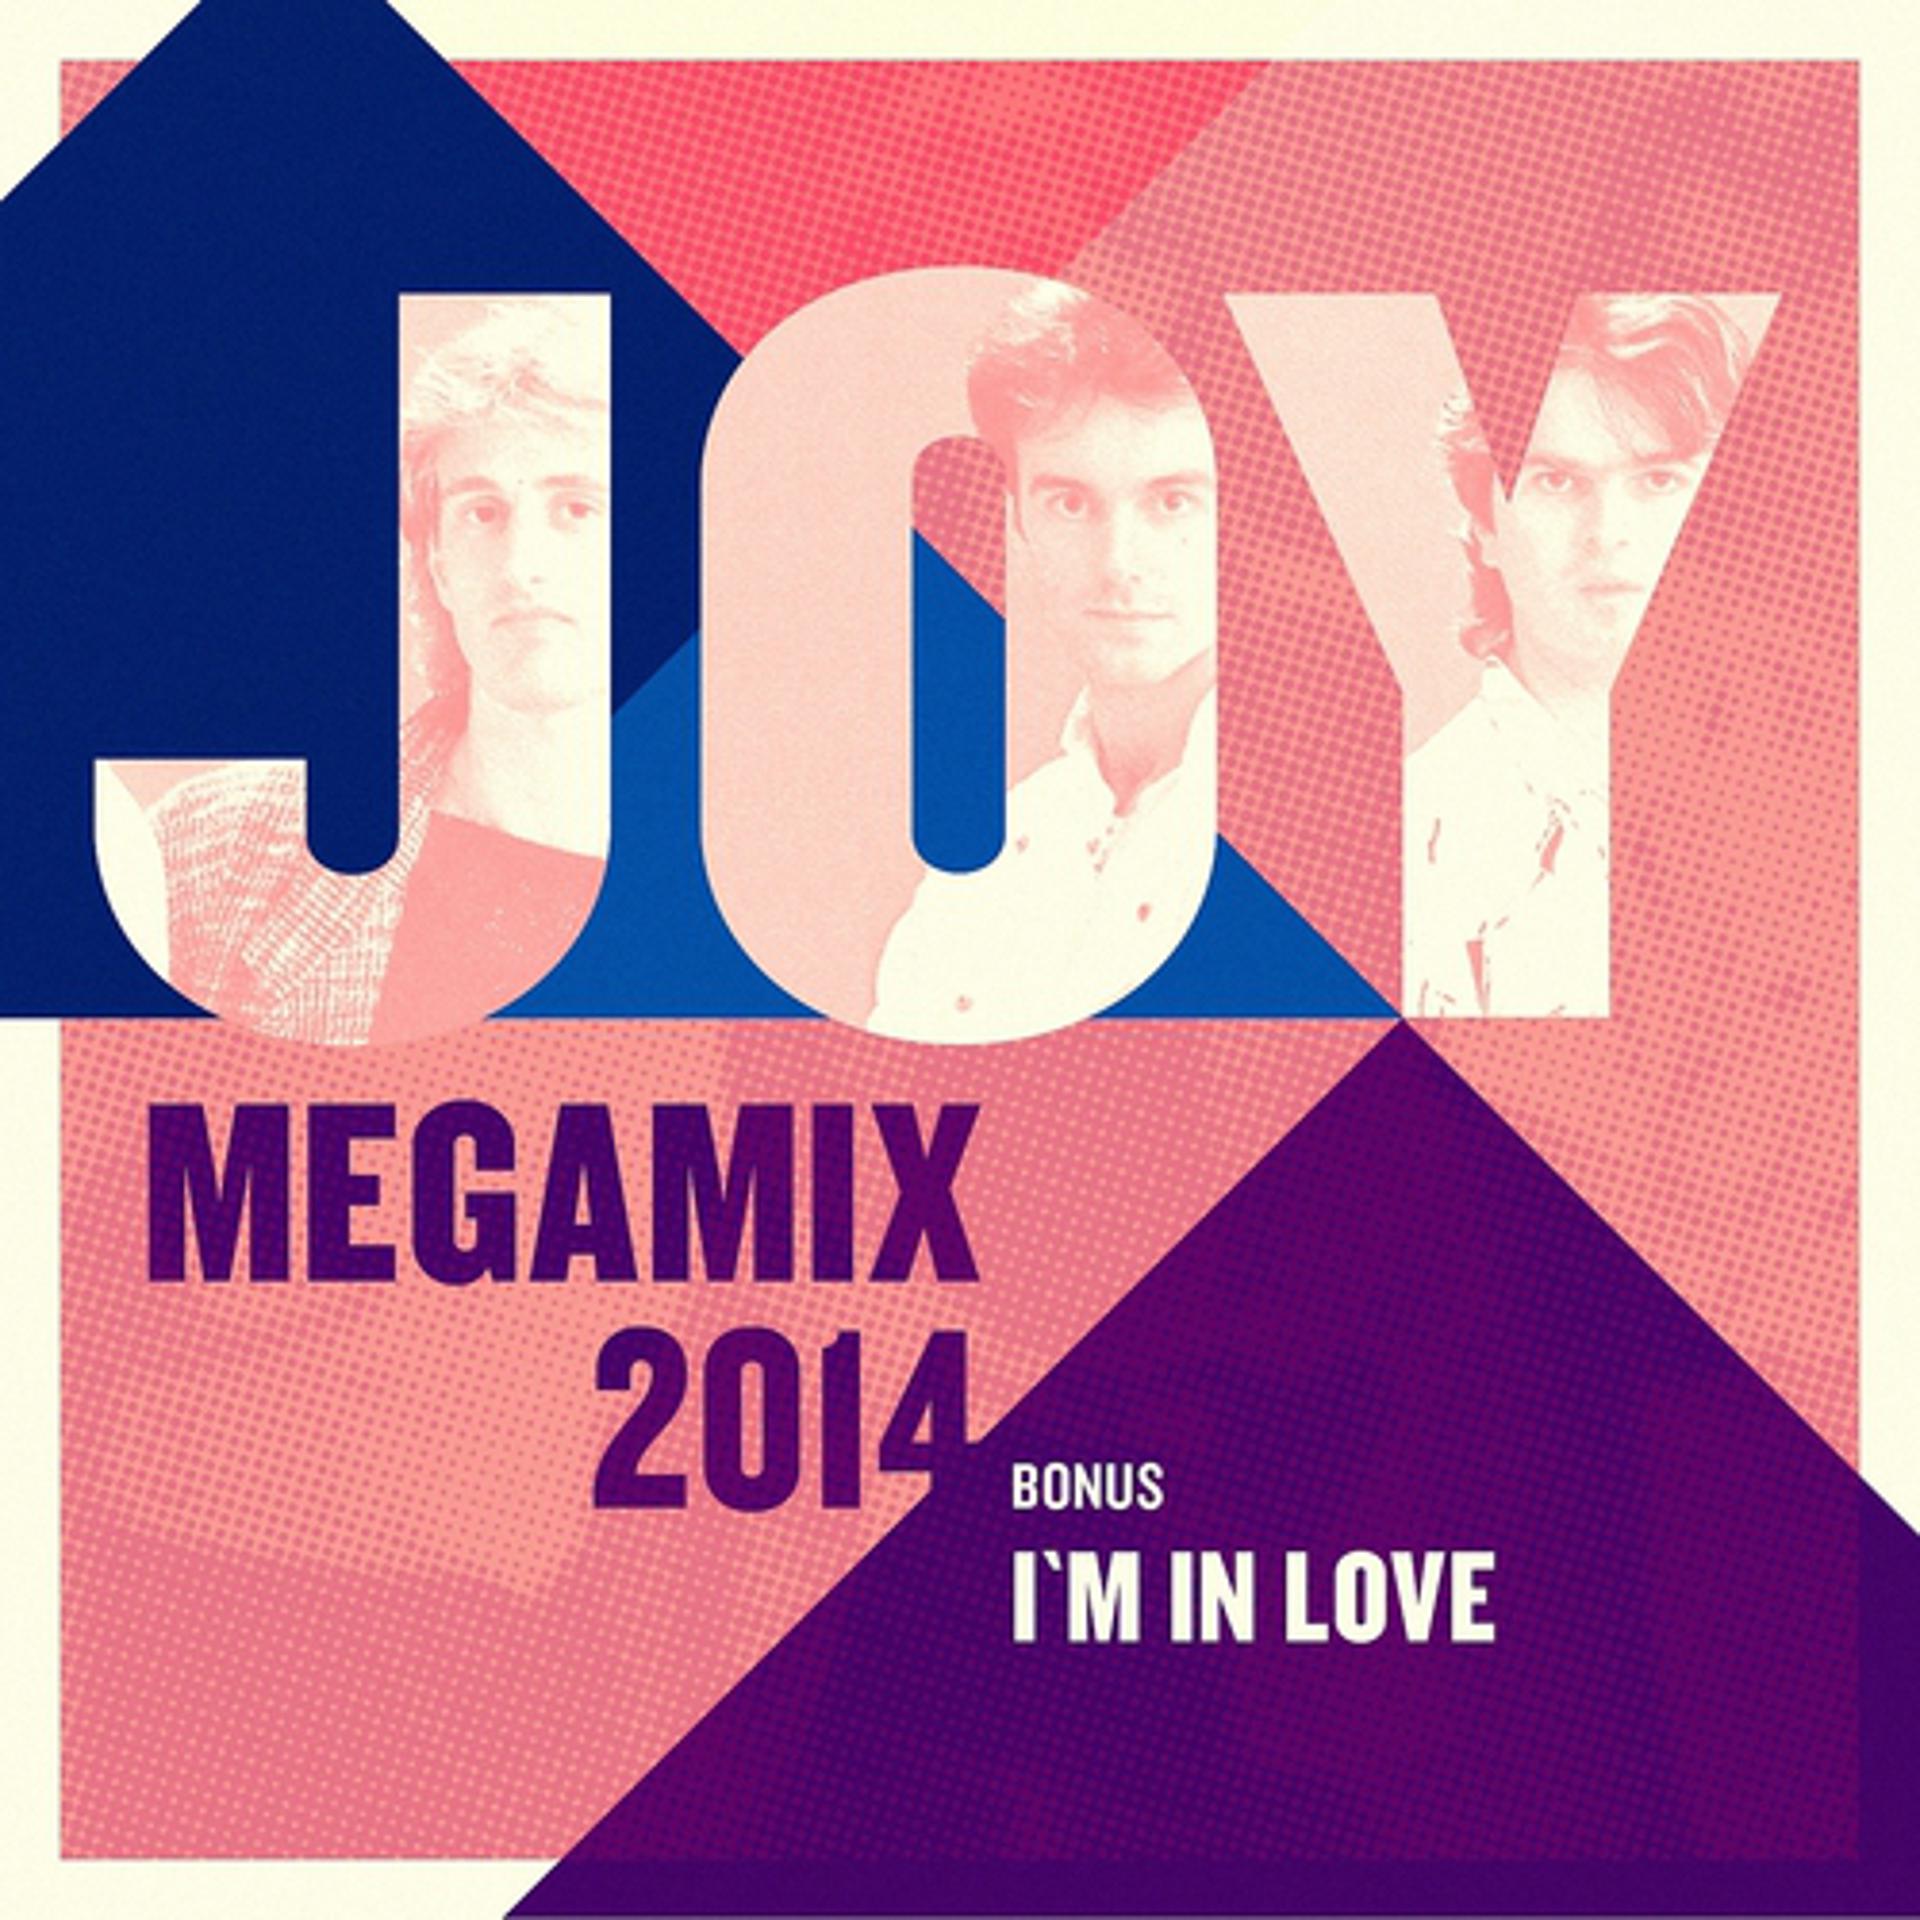 Love Joy группа. Joy i'm in Love обложка альбома. Party Megamix Joy. Обложка альбомаmegamix. Лове джой